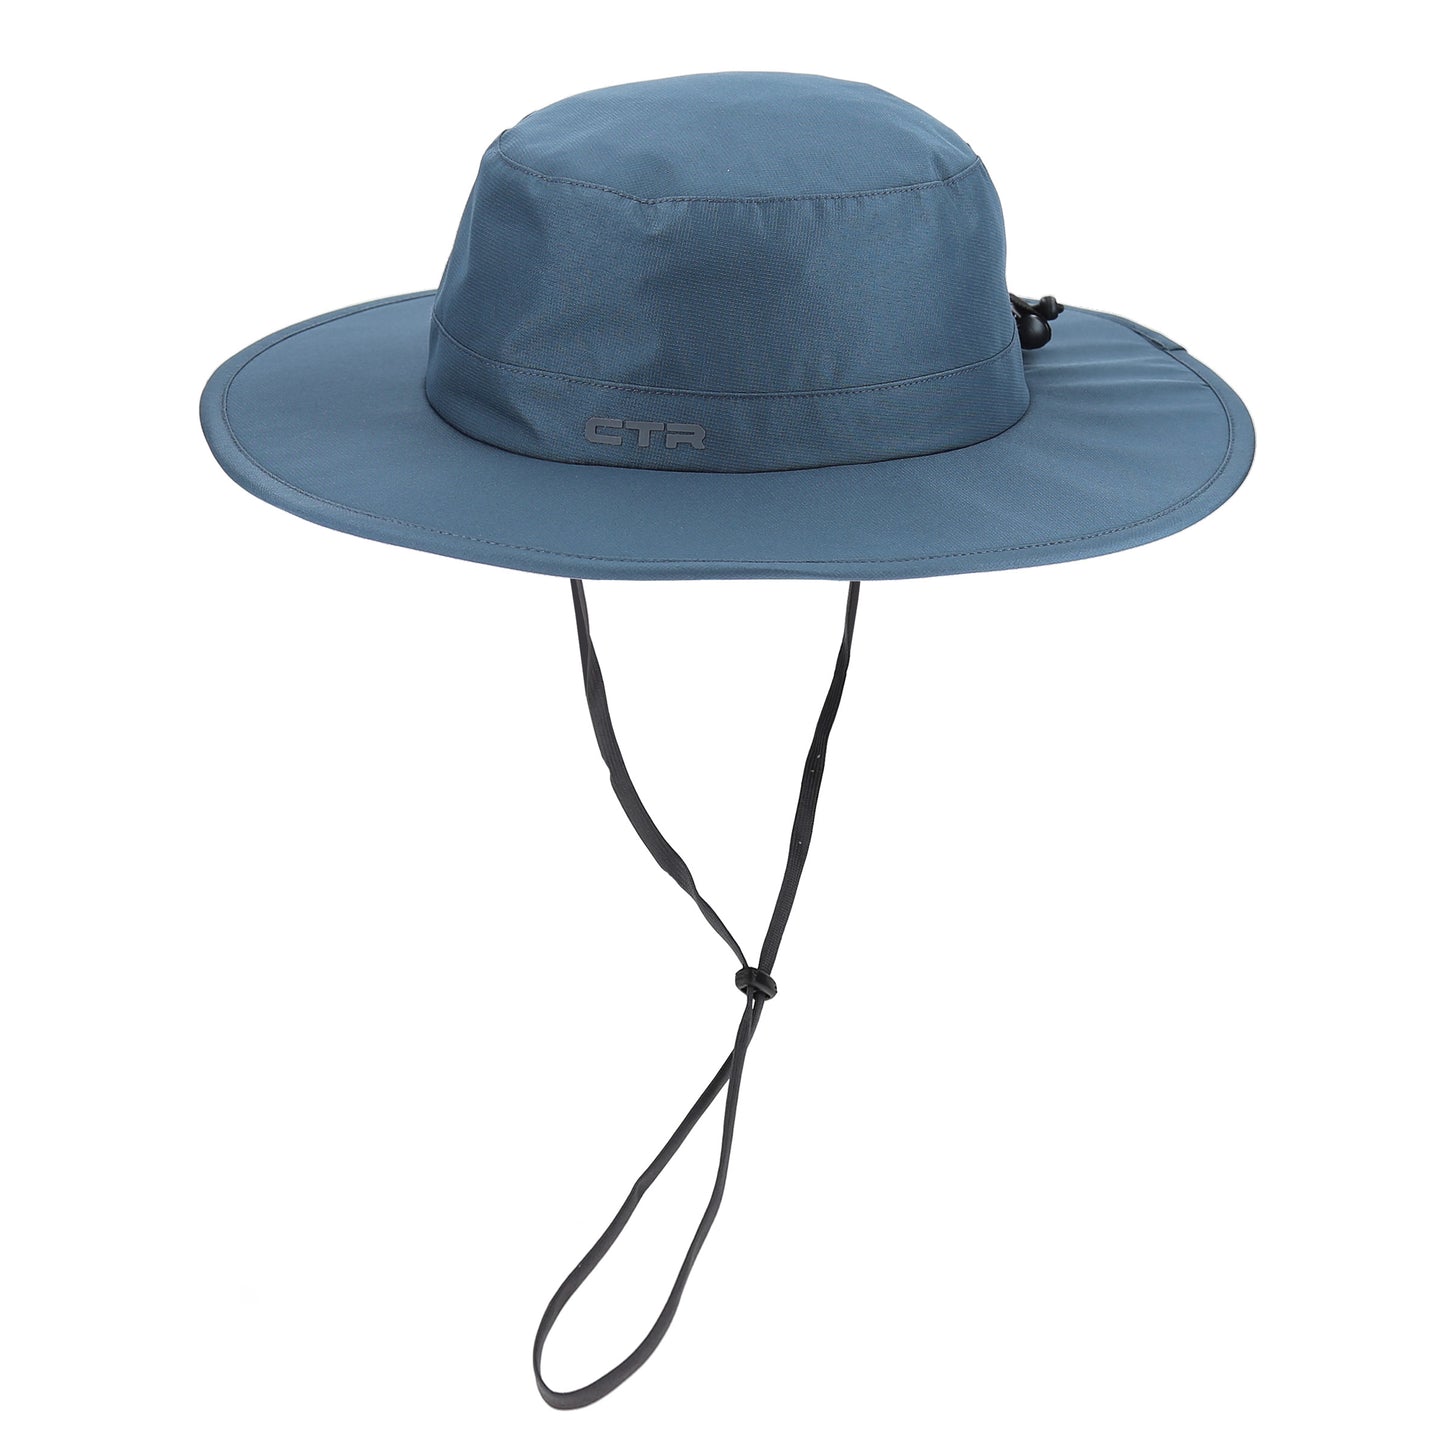 Stratus Cloud Burst Hat CTR Style:1855-Bucket Hat-CTR Outdoors